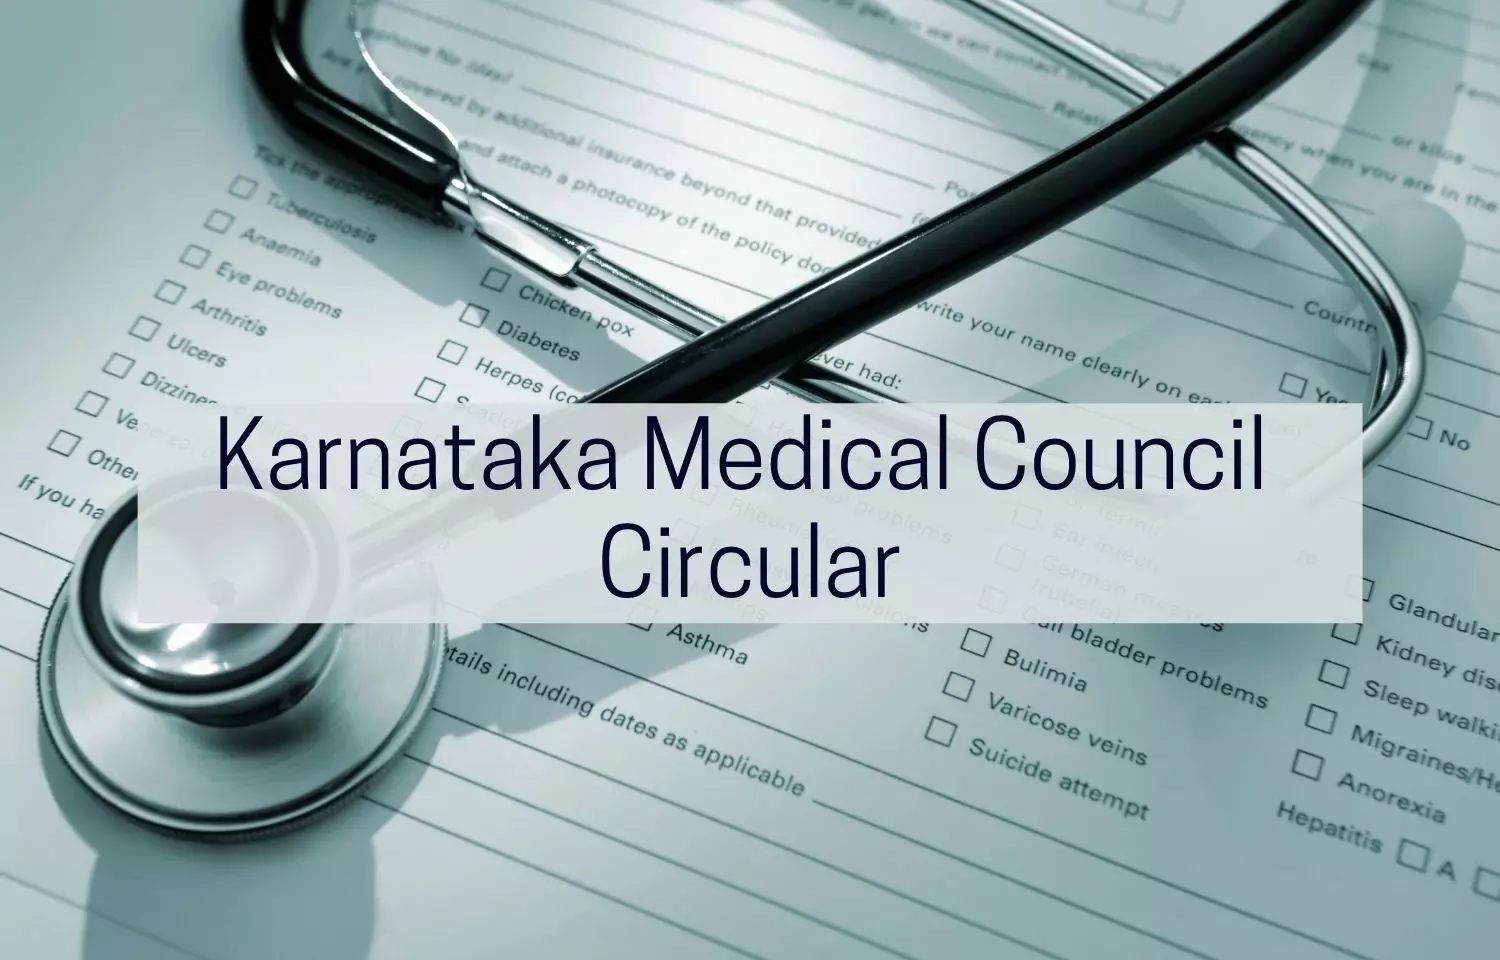 Karnataka Medical Council warns doctors against spread of communal disharmony, issues circular